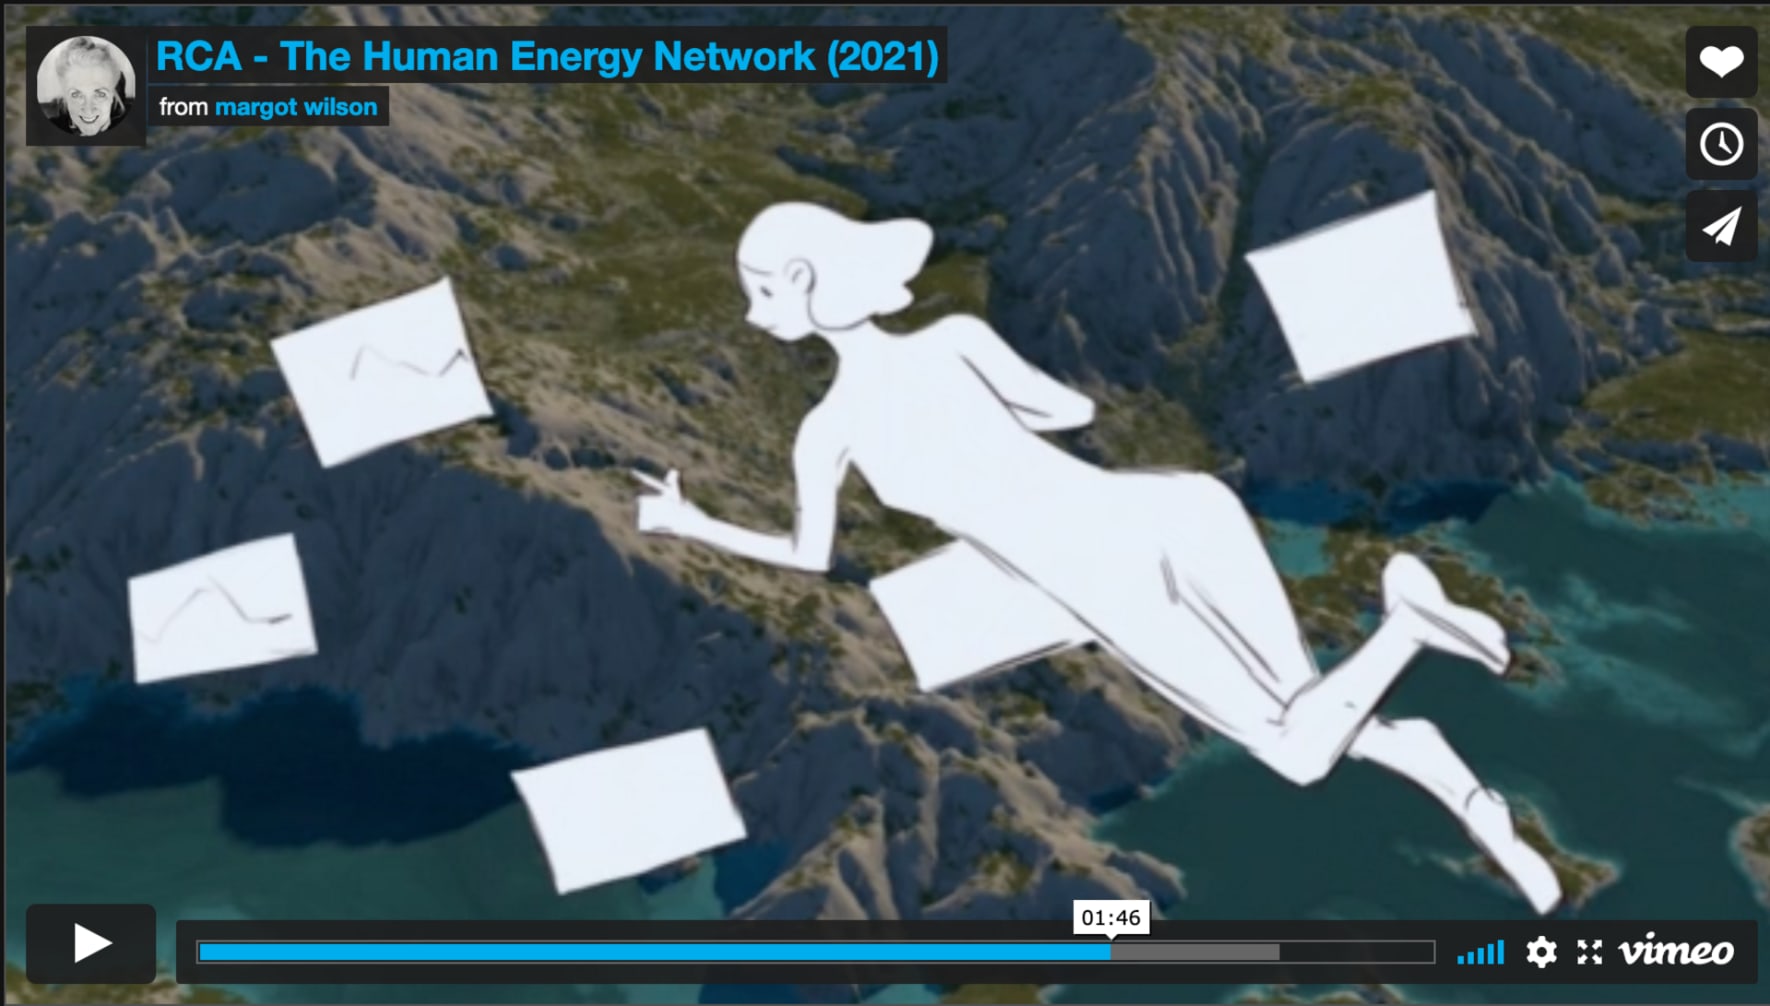 The Human Energy Network